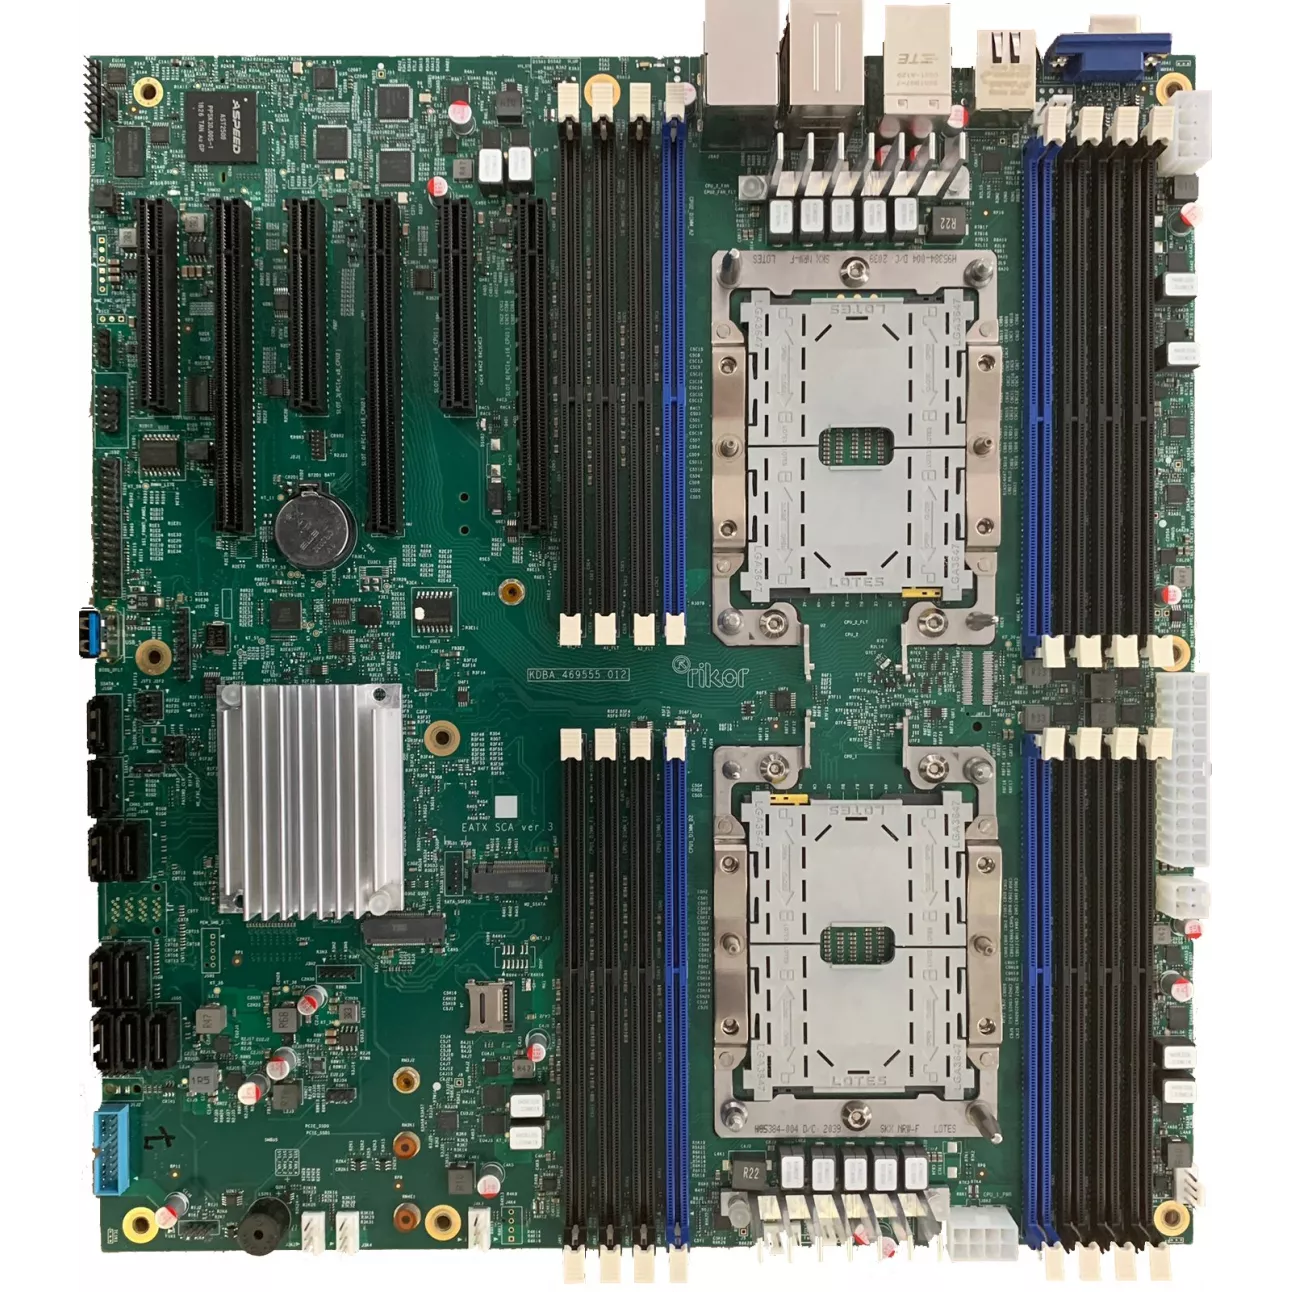 Серверная платформа Rikor 1U RP6104-PB35-650HS, до двух процессоров Intel Xeon Scalable, DDR4, 4x3.5" HDD, 2x1000Base-T, резервируемый БП